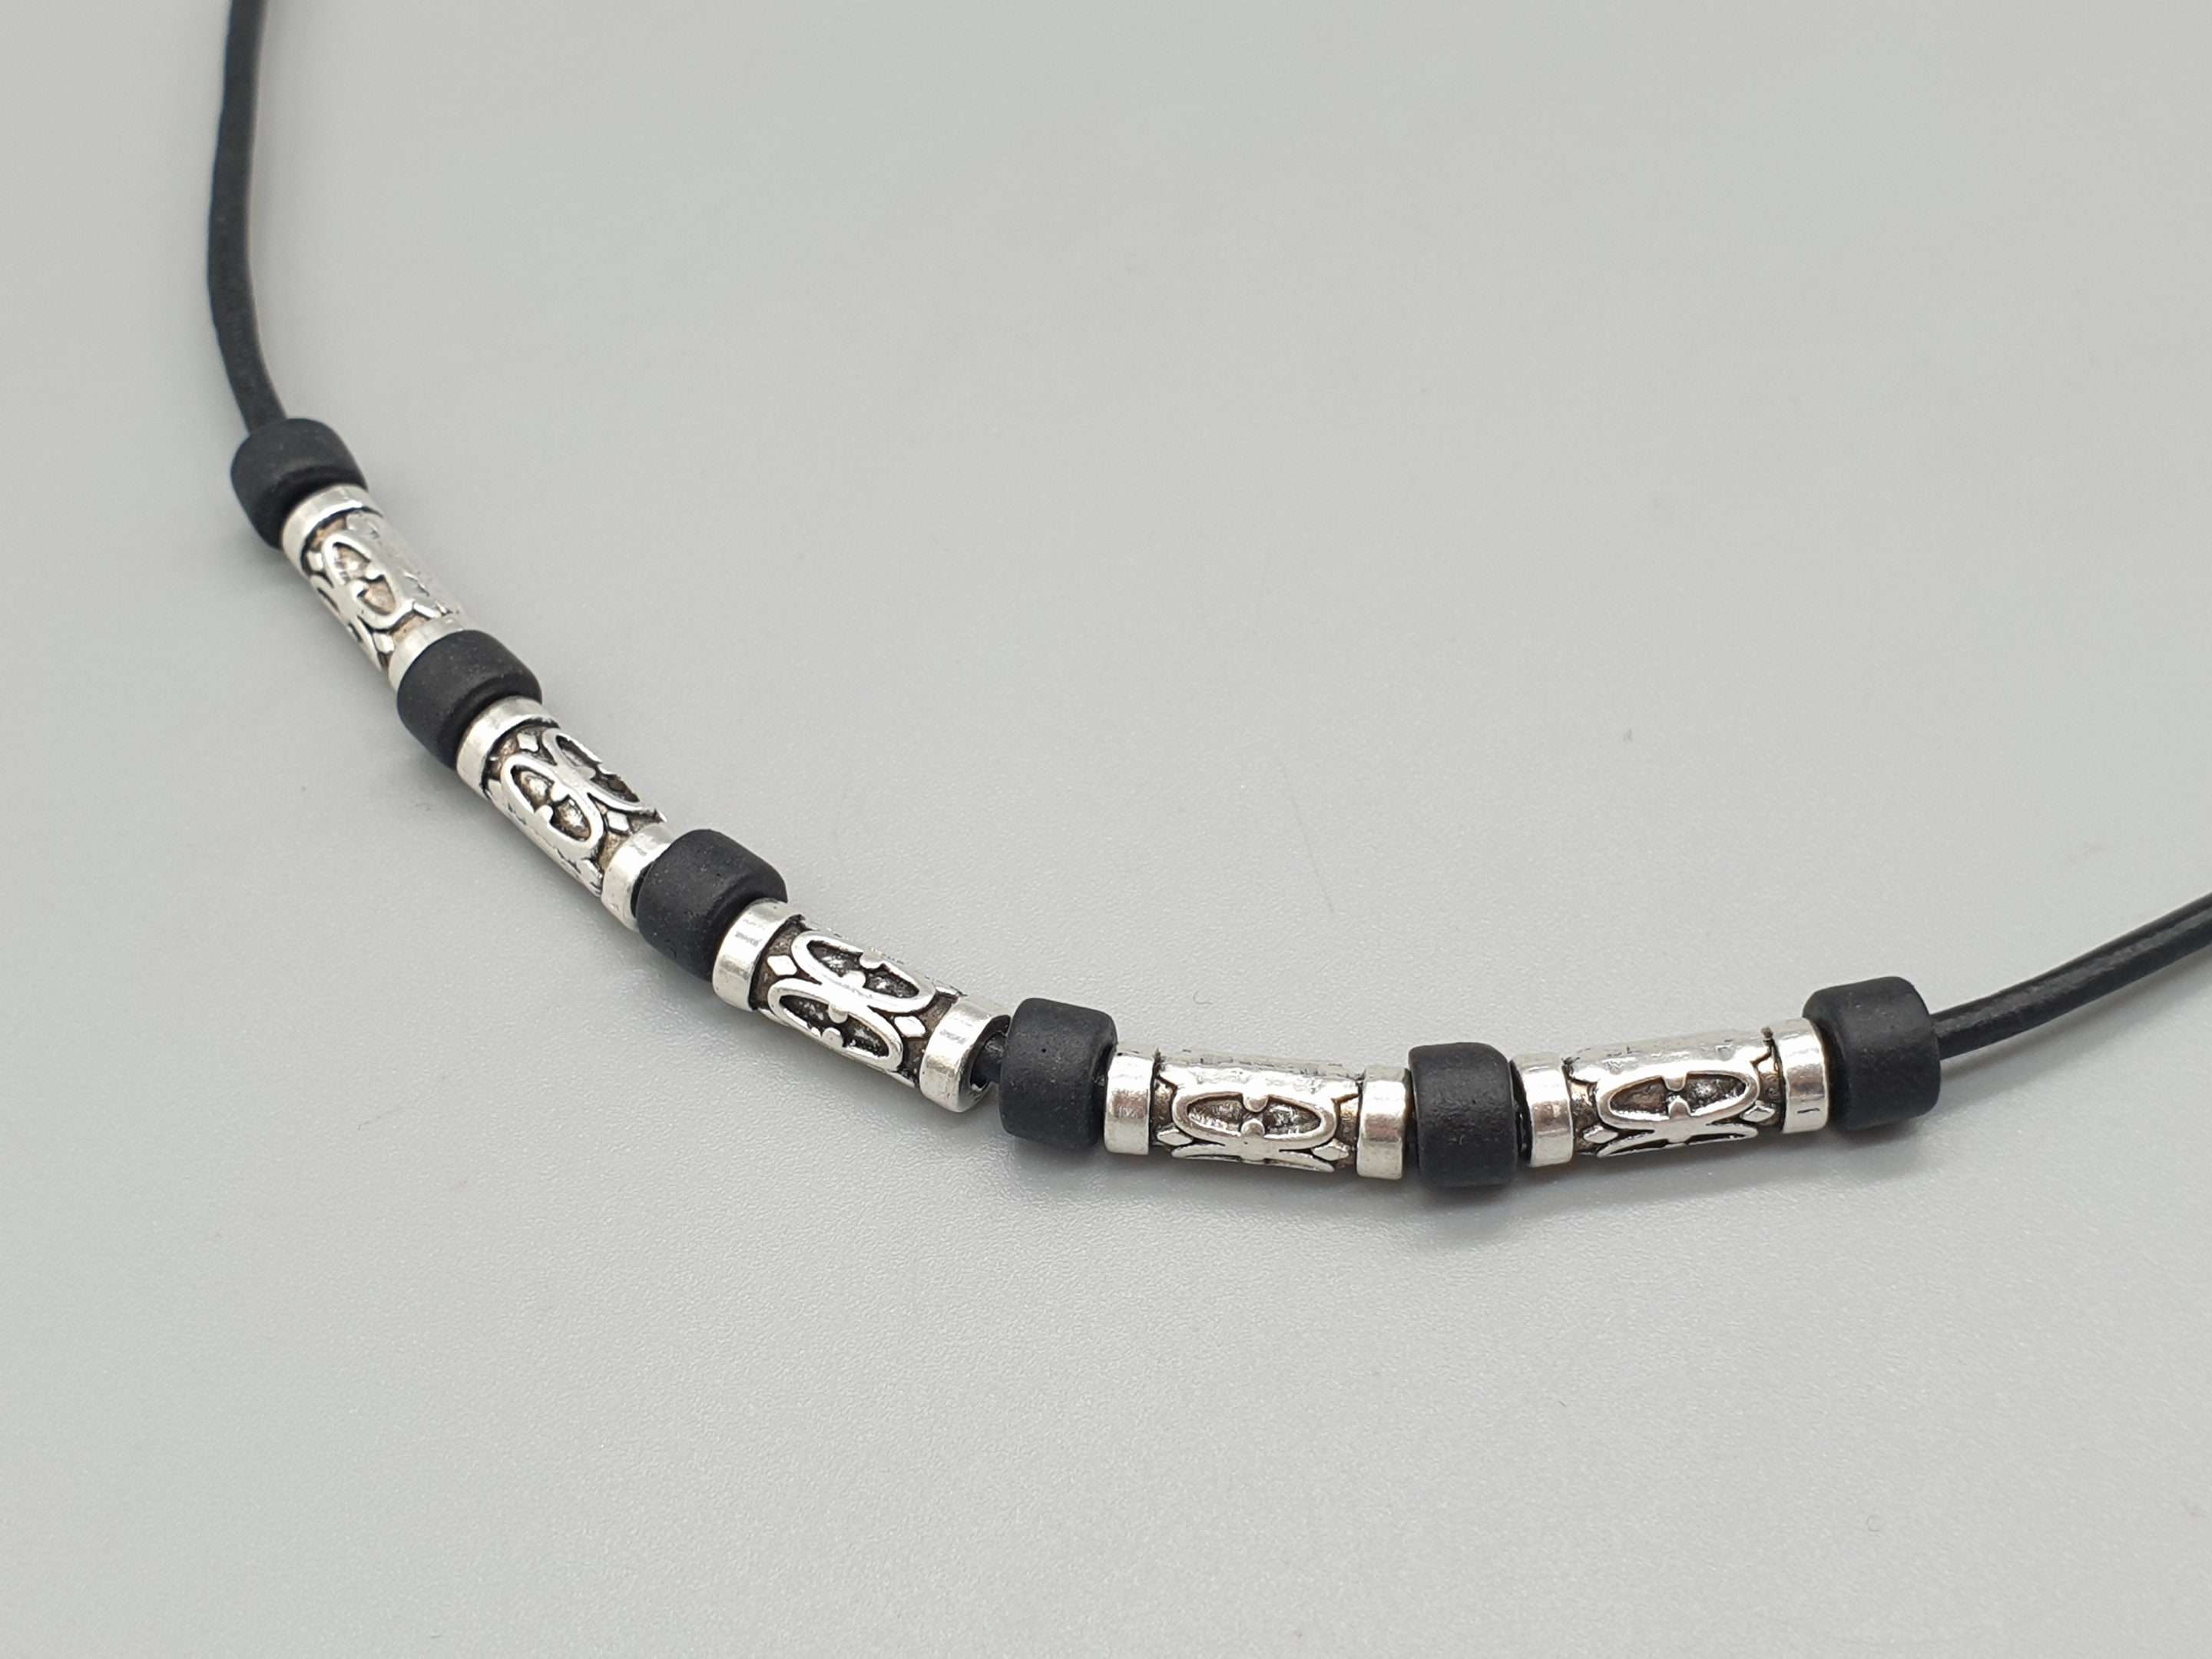 Avalaya Black Silk Ribbon Choker Necklace with Black Ceramic Bead 15mm  Pendant - 30cm L/ 5cm Ext